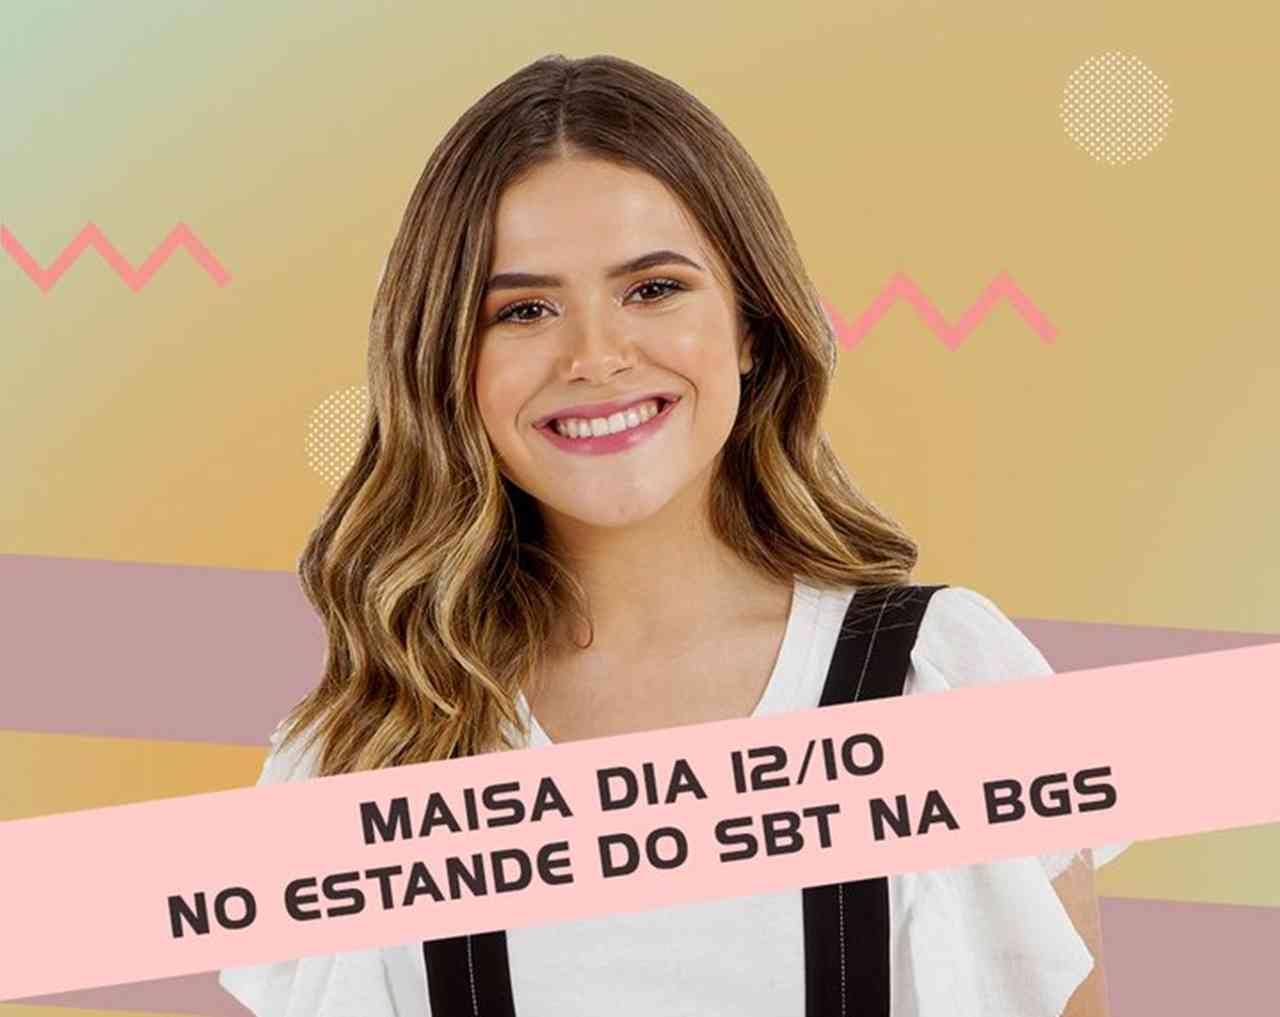 BGS 2019 | Maísa estará presente no evento 31